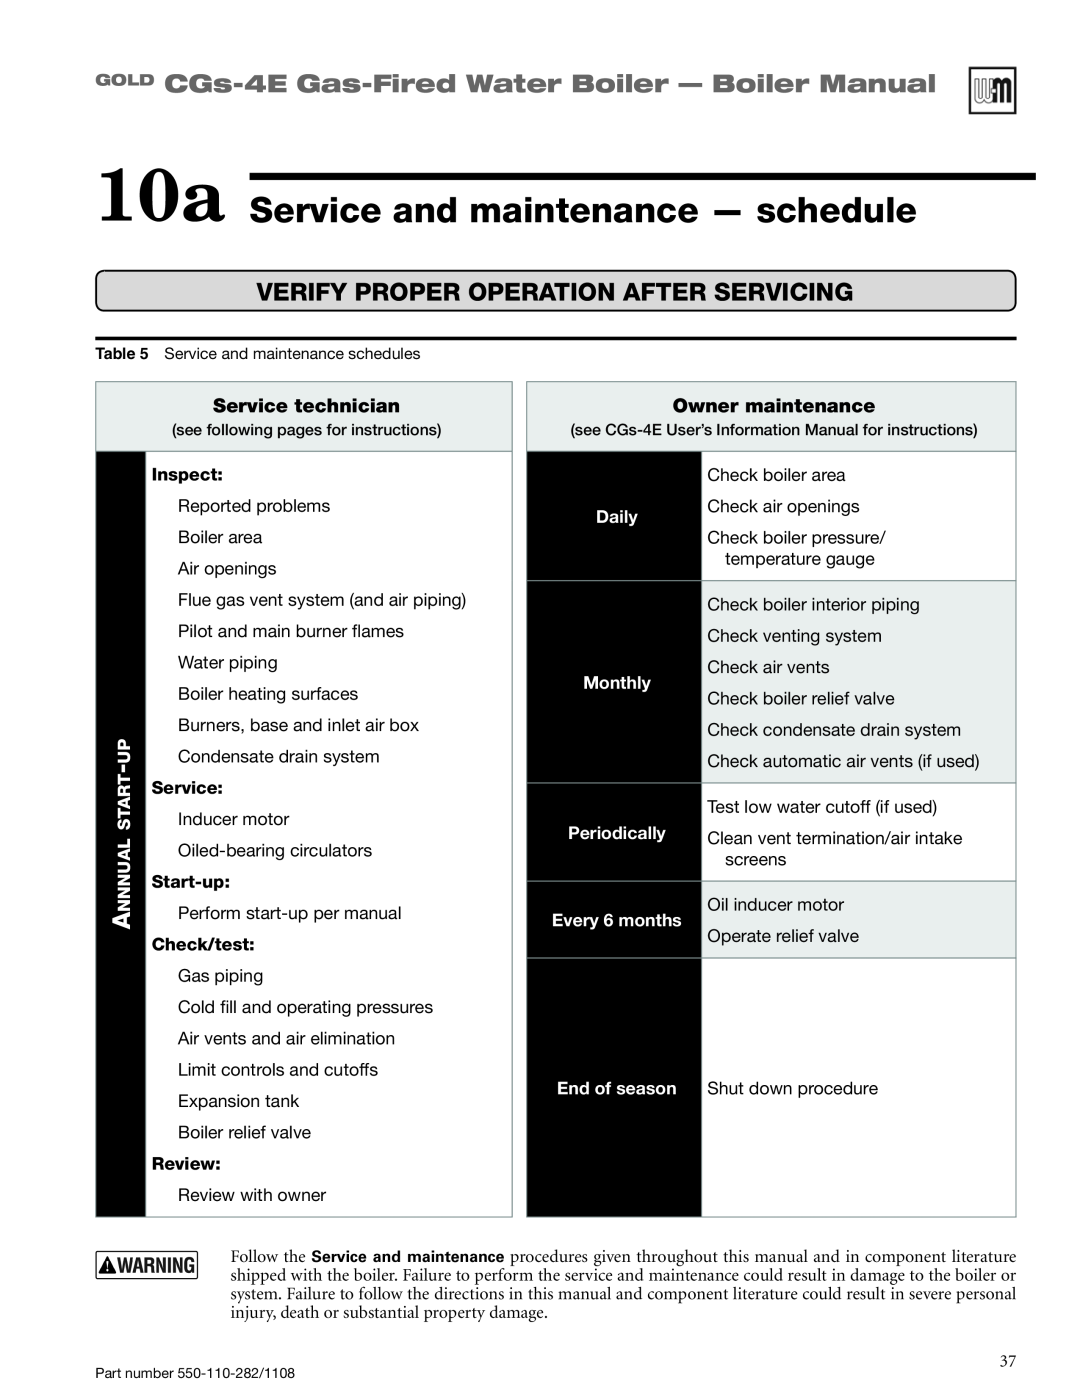 Weil-McLain CGS-4E 10a Service and maintenance - schedule, Verify Proper Operation After Servicing, Service technician 